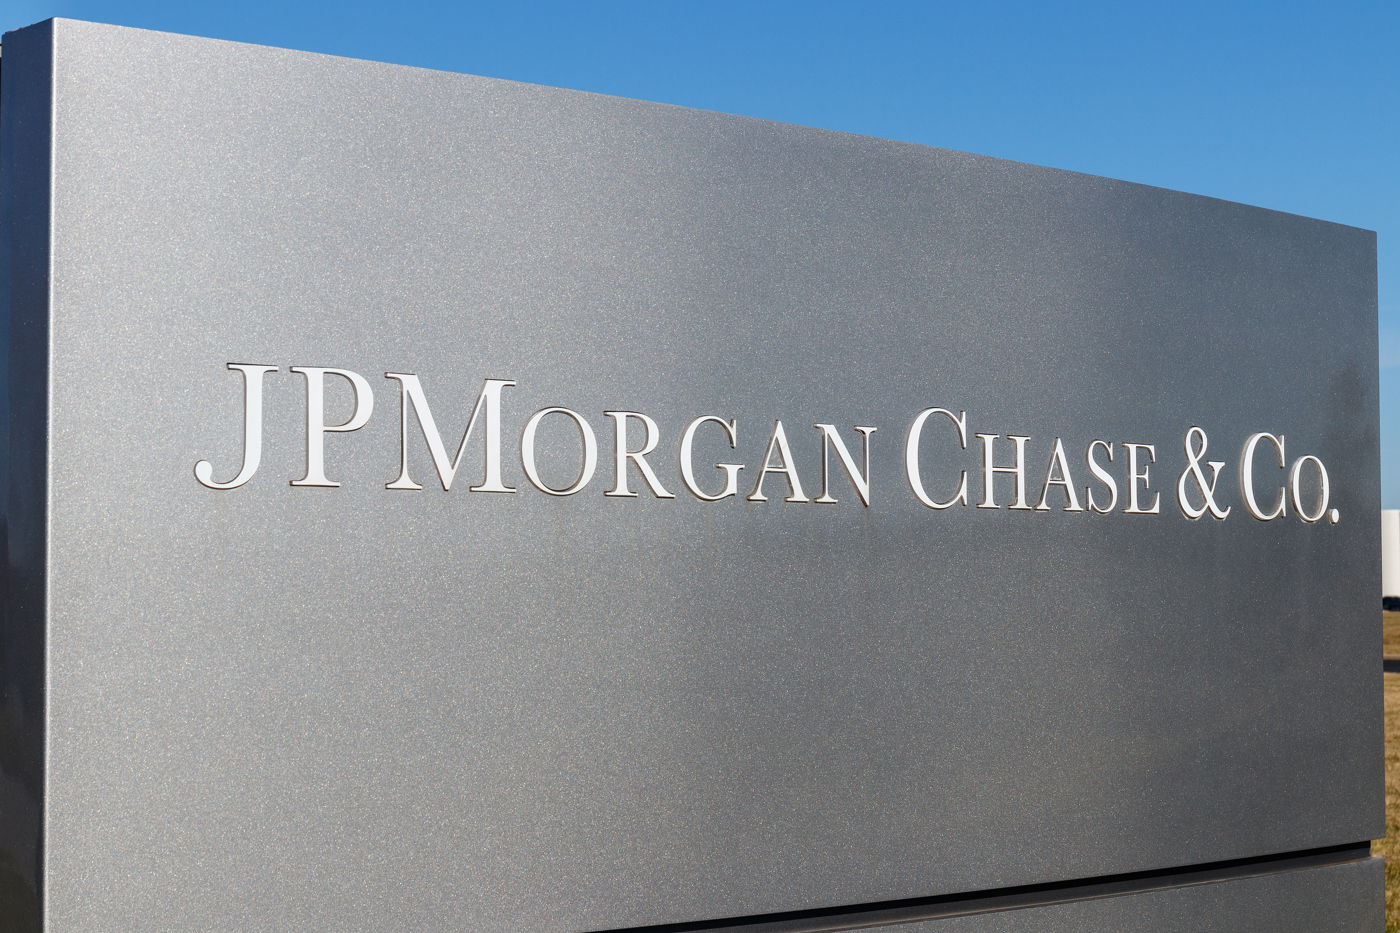 JPMorgan Chase JPM stock news and analysis